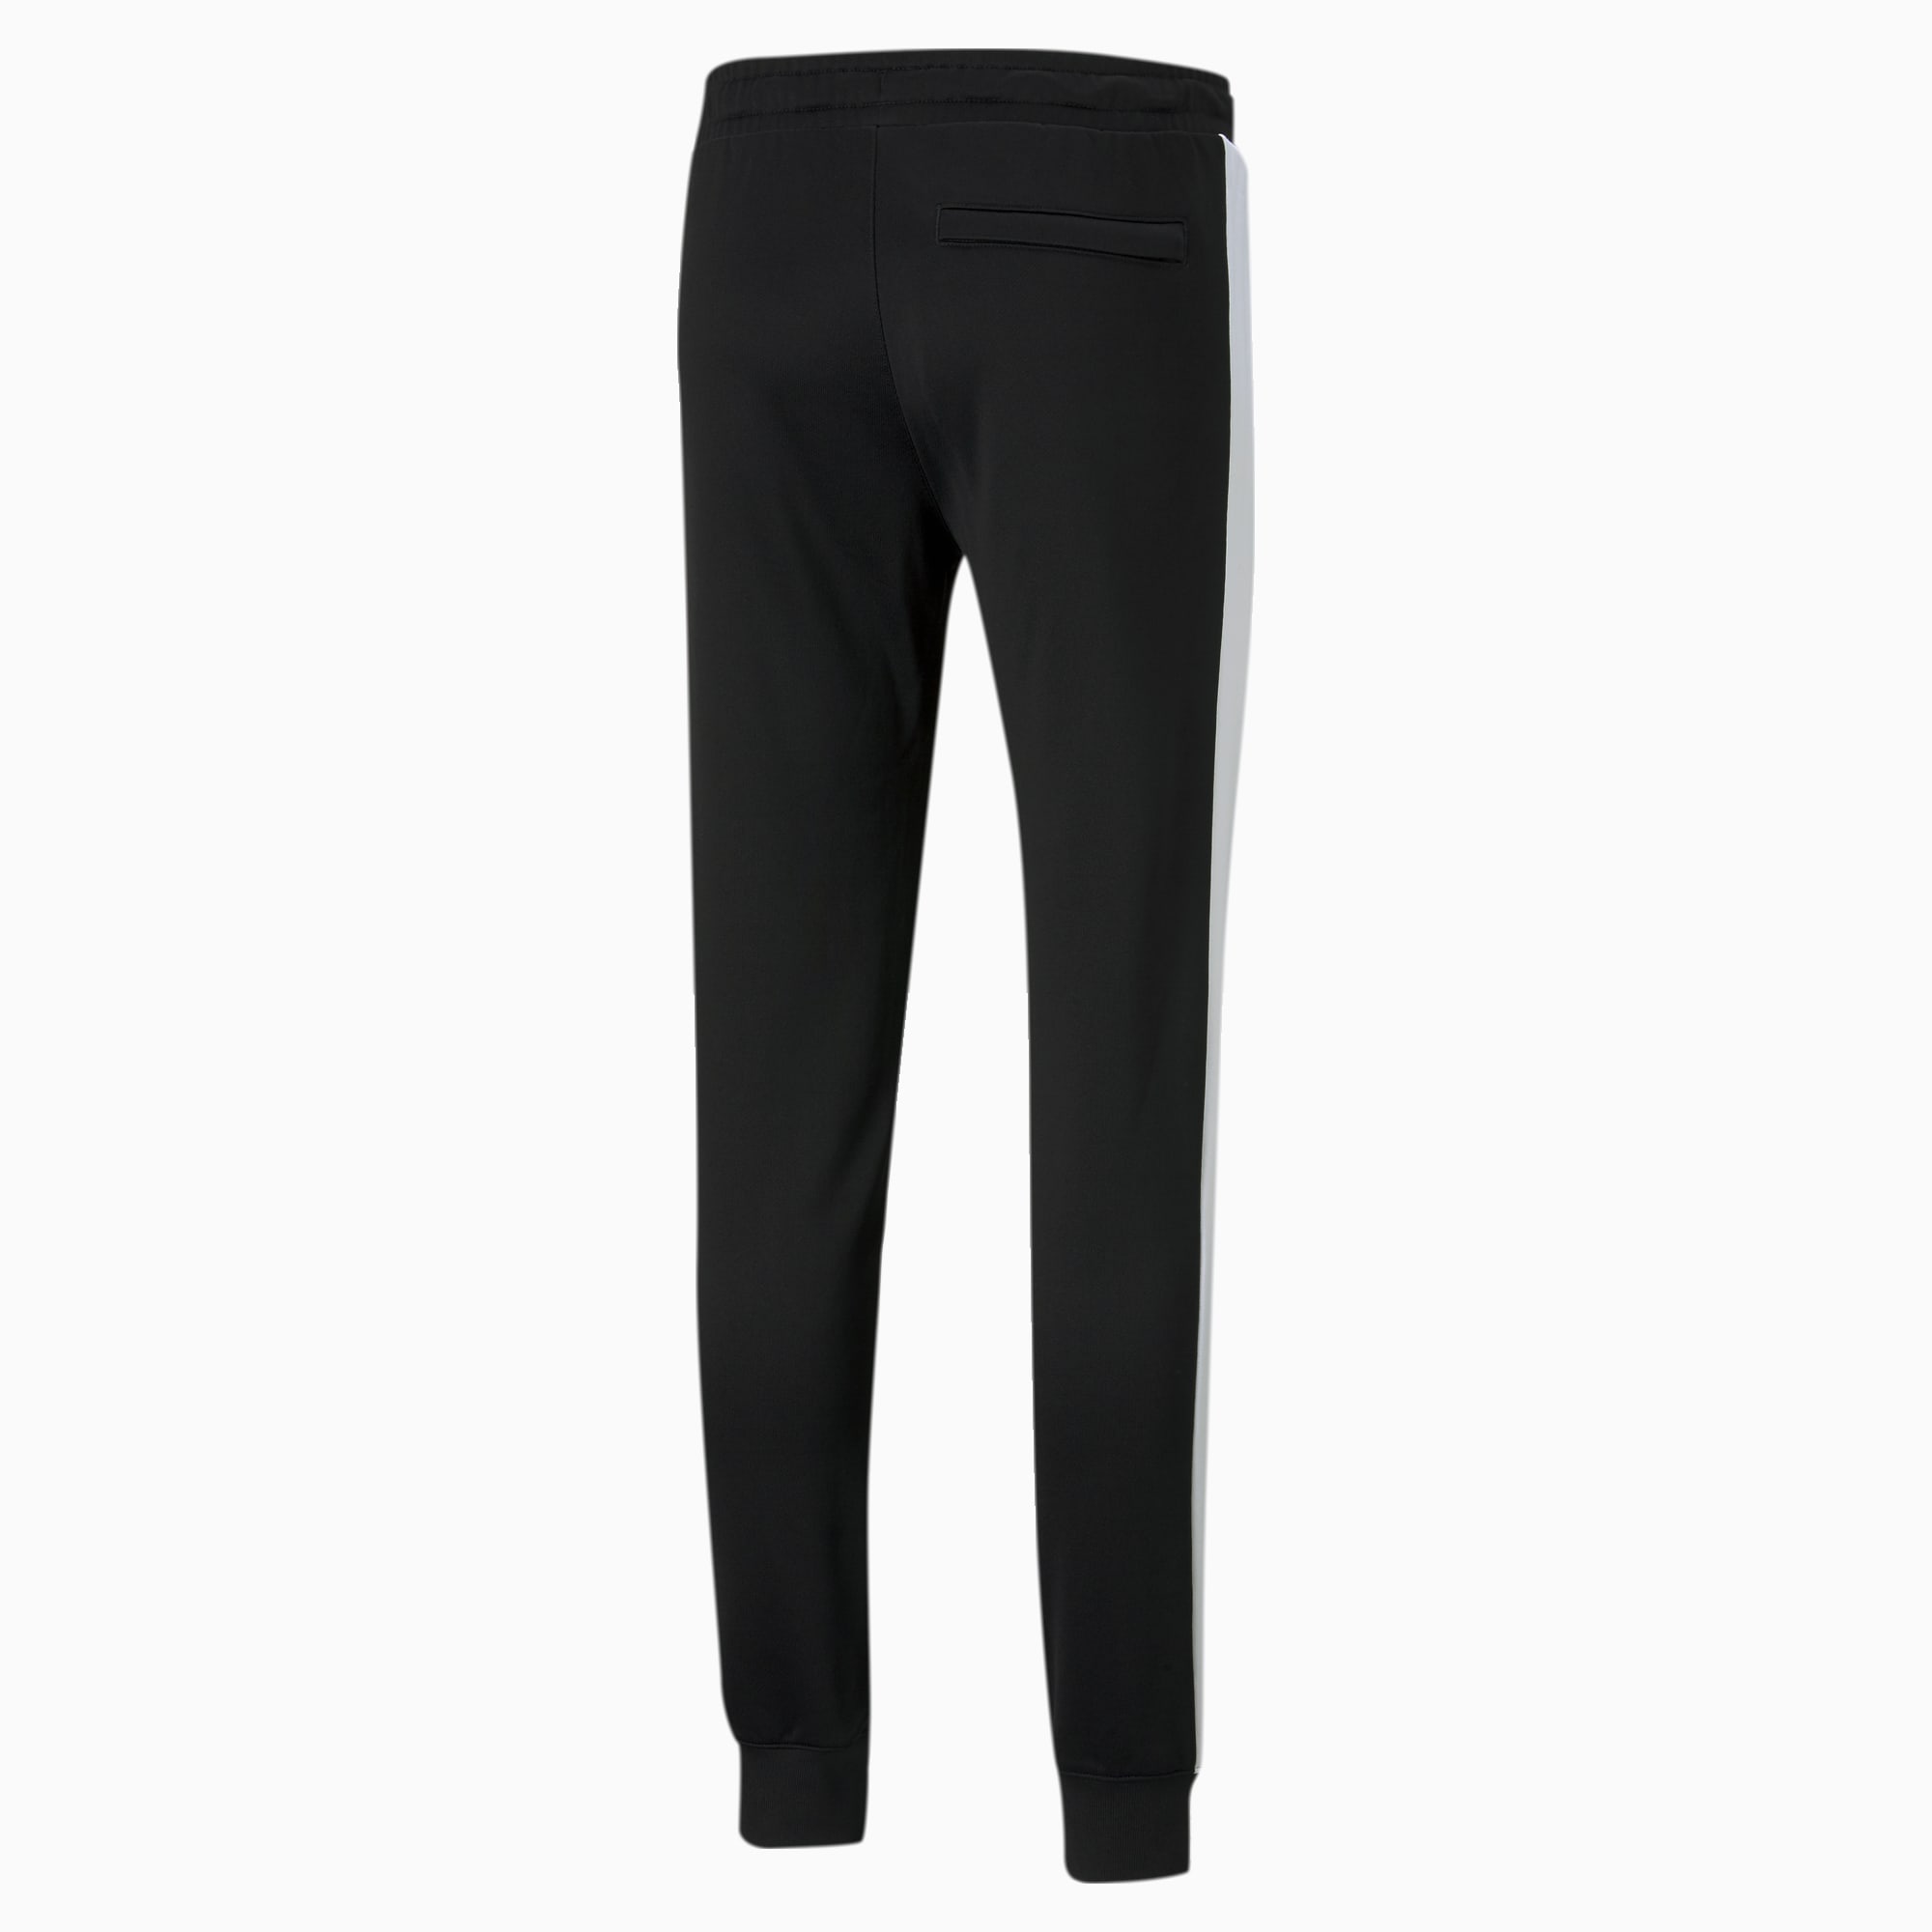 PUMA Iconic T7 Men's Track Pants, Black, Size XXS, Clothing